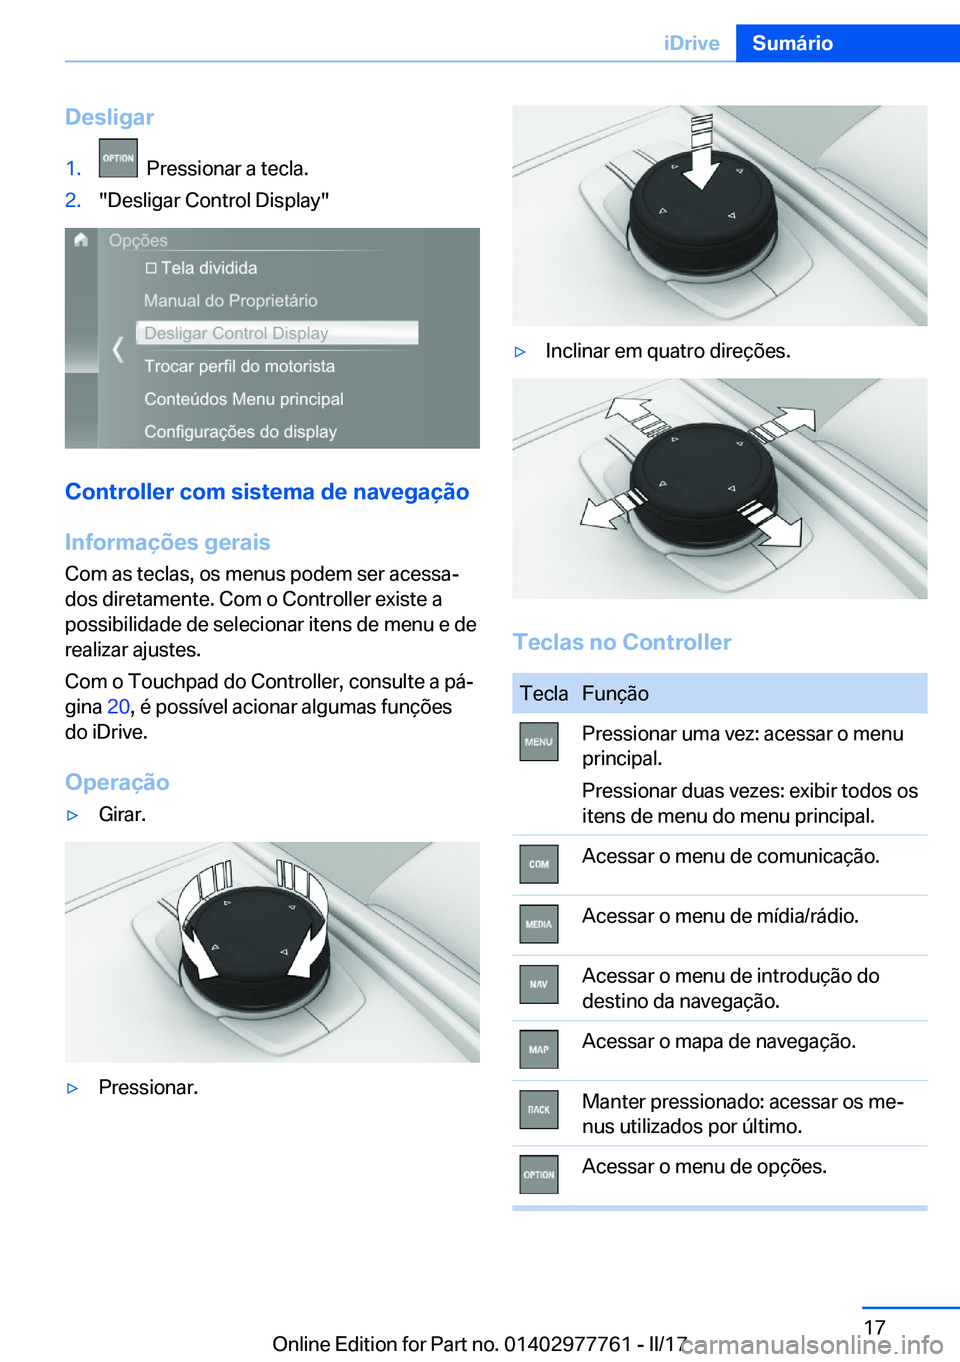 BMW 2 SERIES COUPE 2017  Manual do condutor (in Portuguese) �D�e�s�l�i�g�a�r�1�.� � �P�r�e�s�s�i�o�n�a�r� �a� �t�e�c�l�a�.�2�.�"�D�e�s�l�i�g�a�r� �C�o�n�t�r�o�l� �D�i�s�p�l�a�y�"
�C�o�n�t�r�o�l�l�e�r��c�o�m��s�i�s�t�e�m�a��d�e��n�a�v�e�g�a�